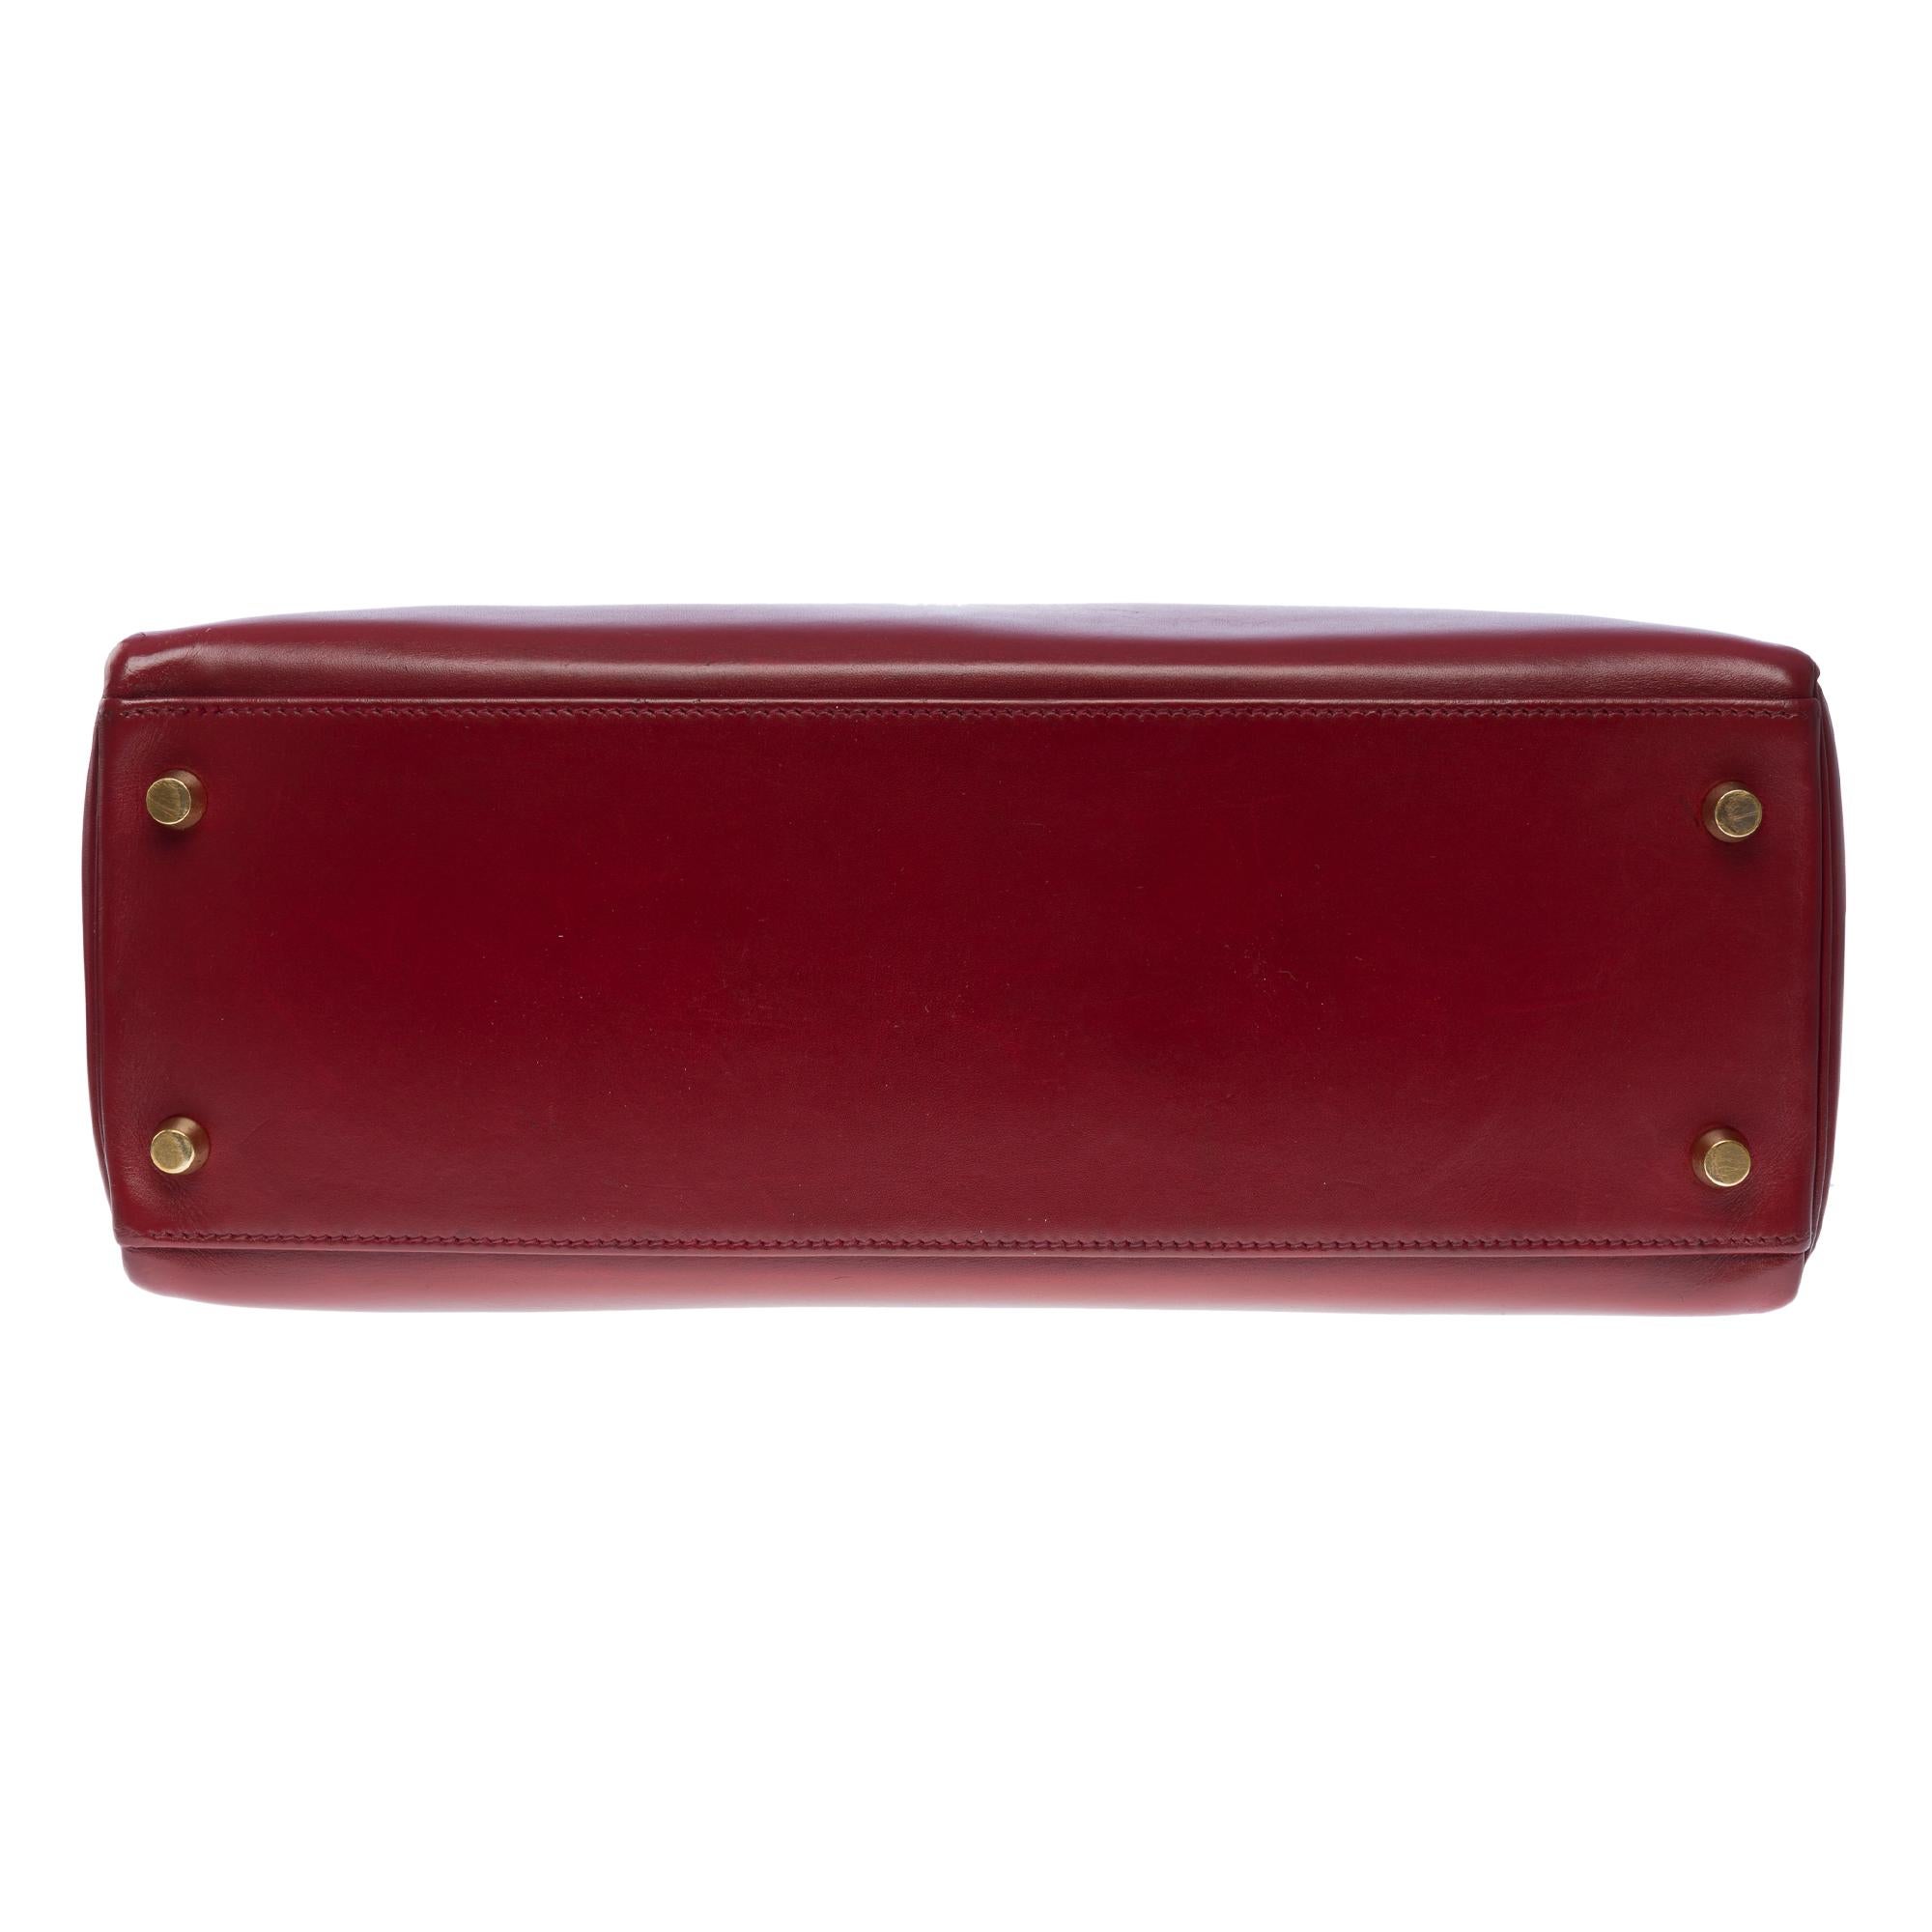 Hermès Kelly 32 retourne handbag strap in Burgundy box calfskin leather, GHW 6